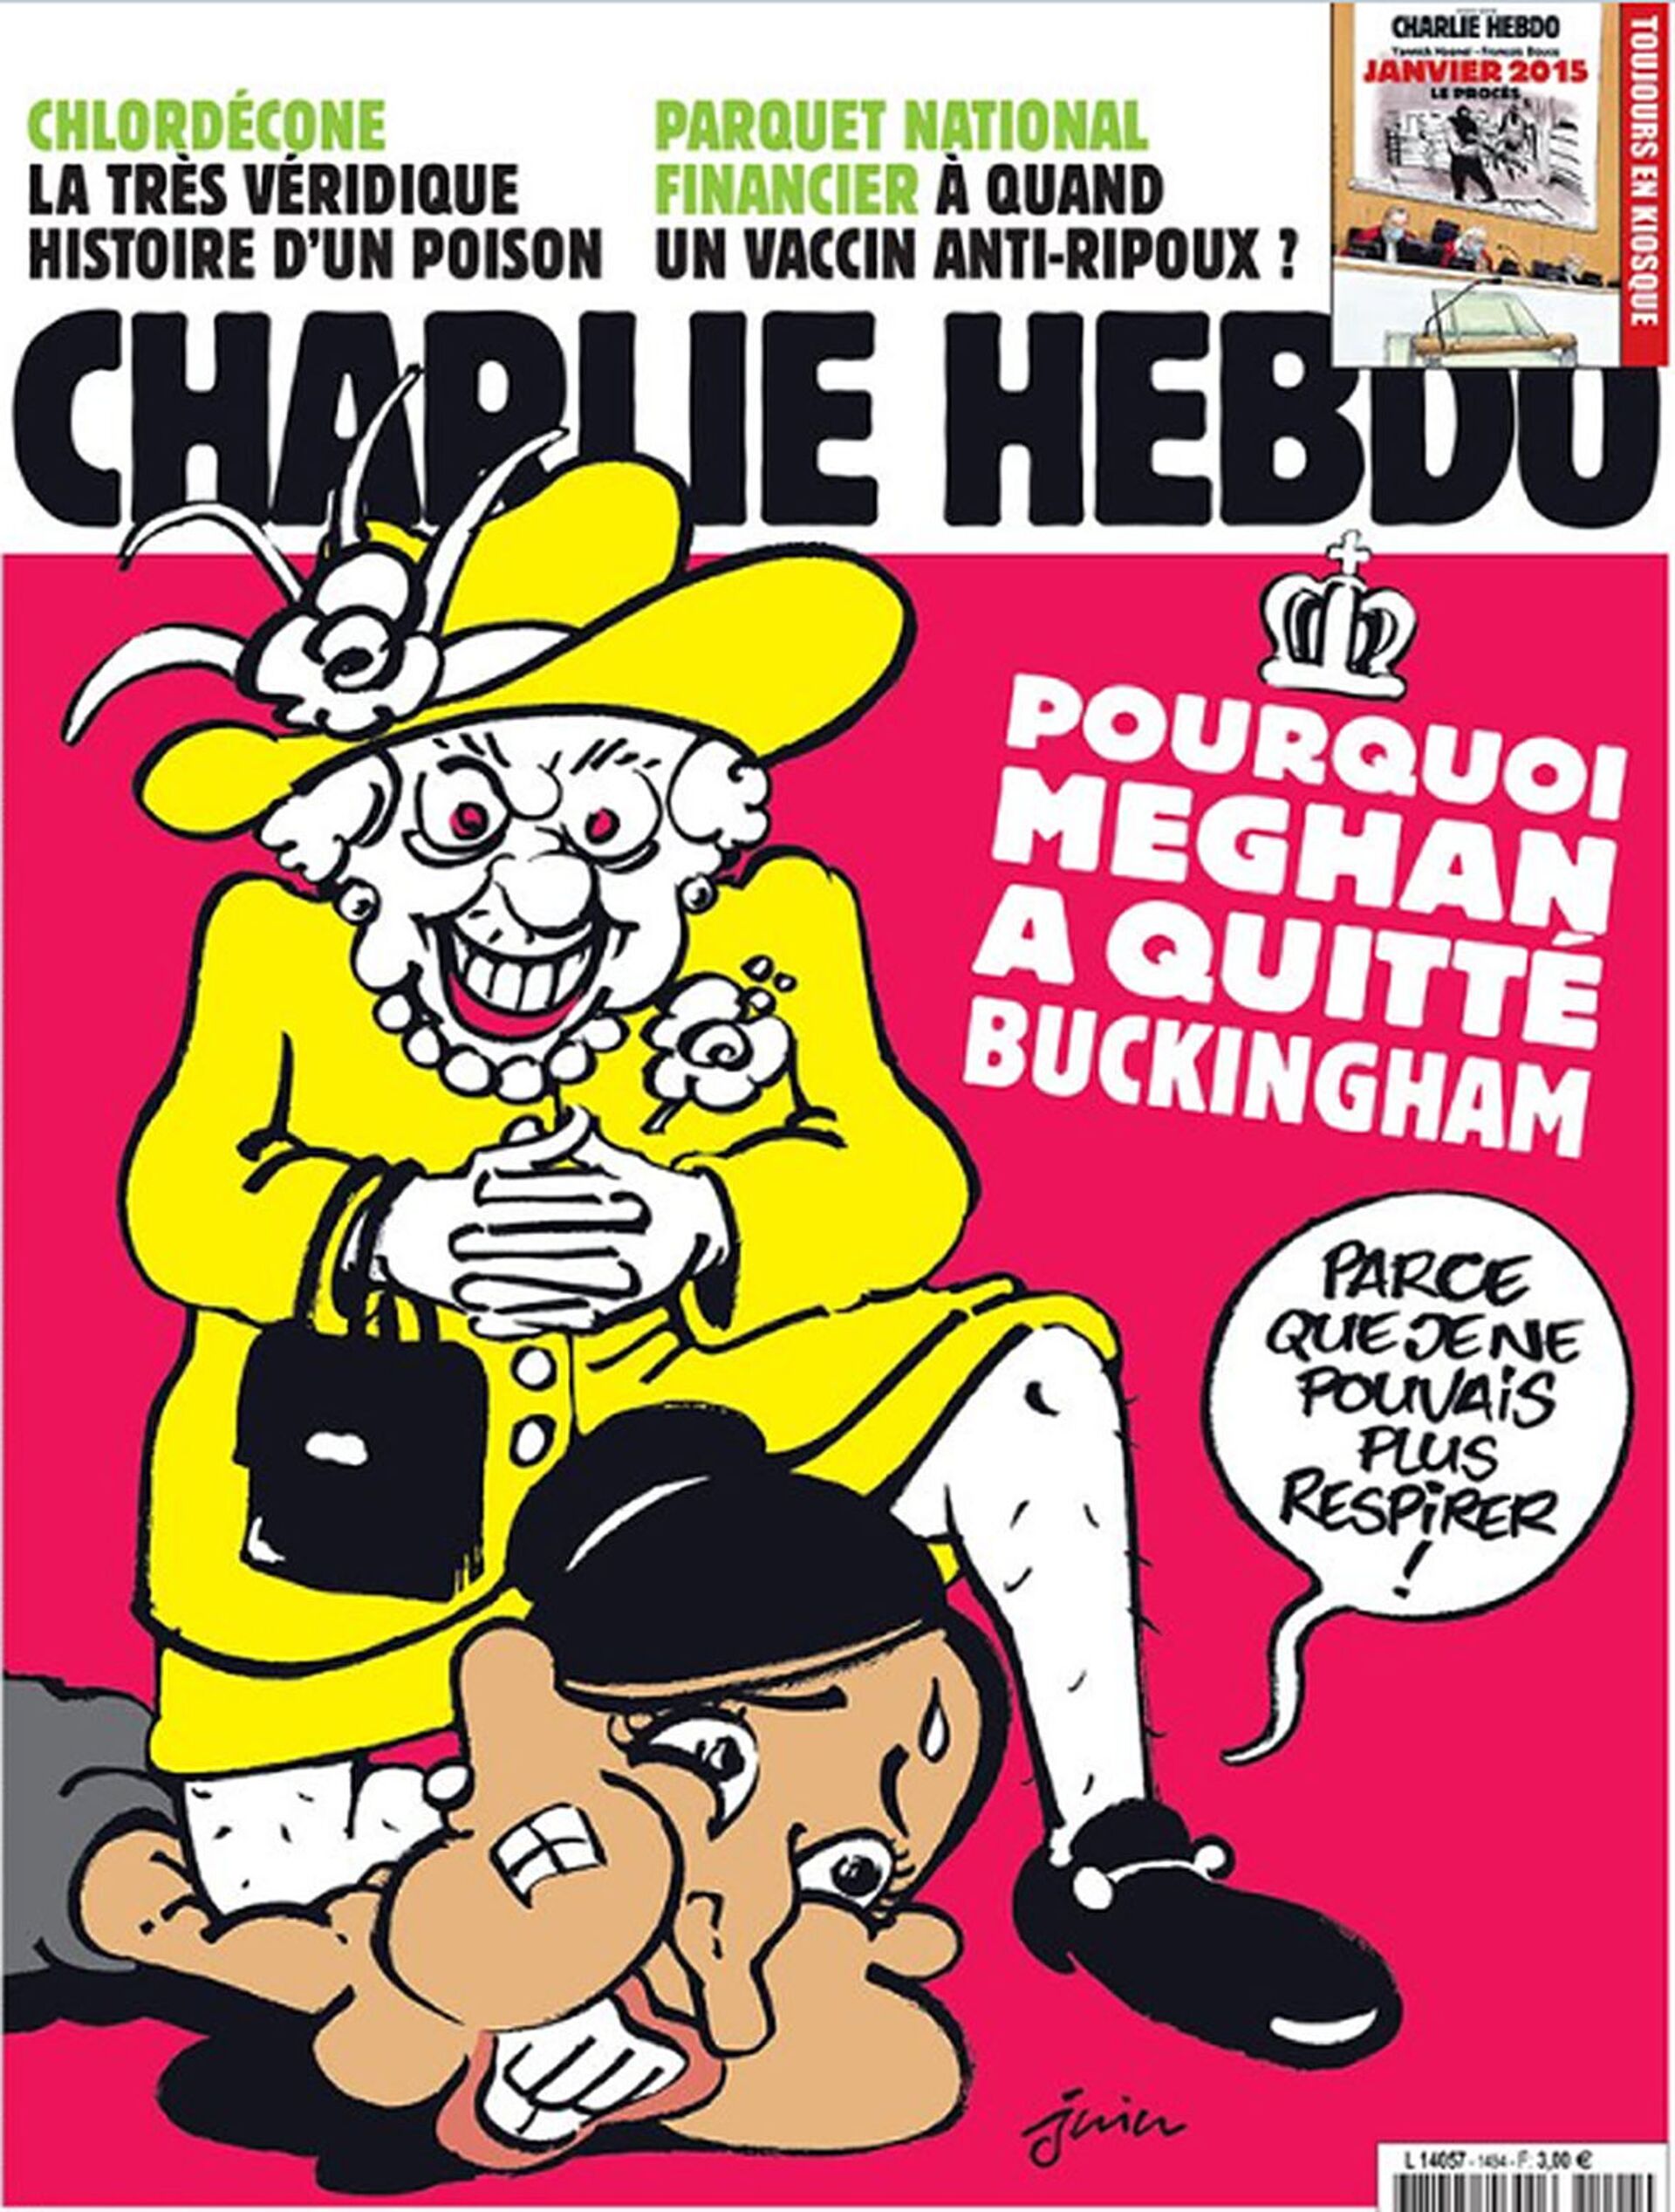 Карикатура в журнале Charlie Hebdo, где на изображении Елизавета II душит жену внука, Меган Маркл - Sputnik Lietuva, 1920, 12.05.2021